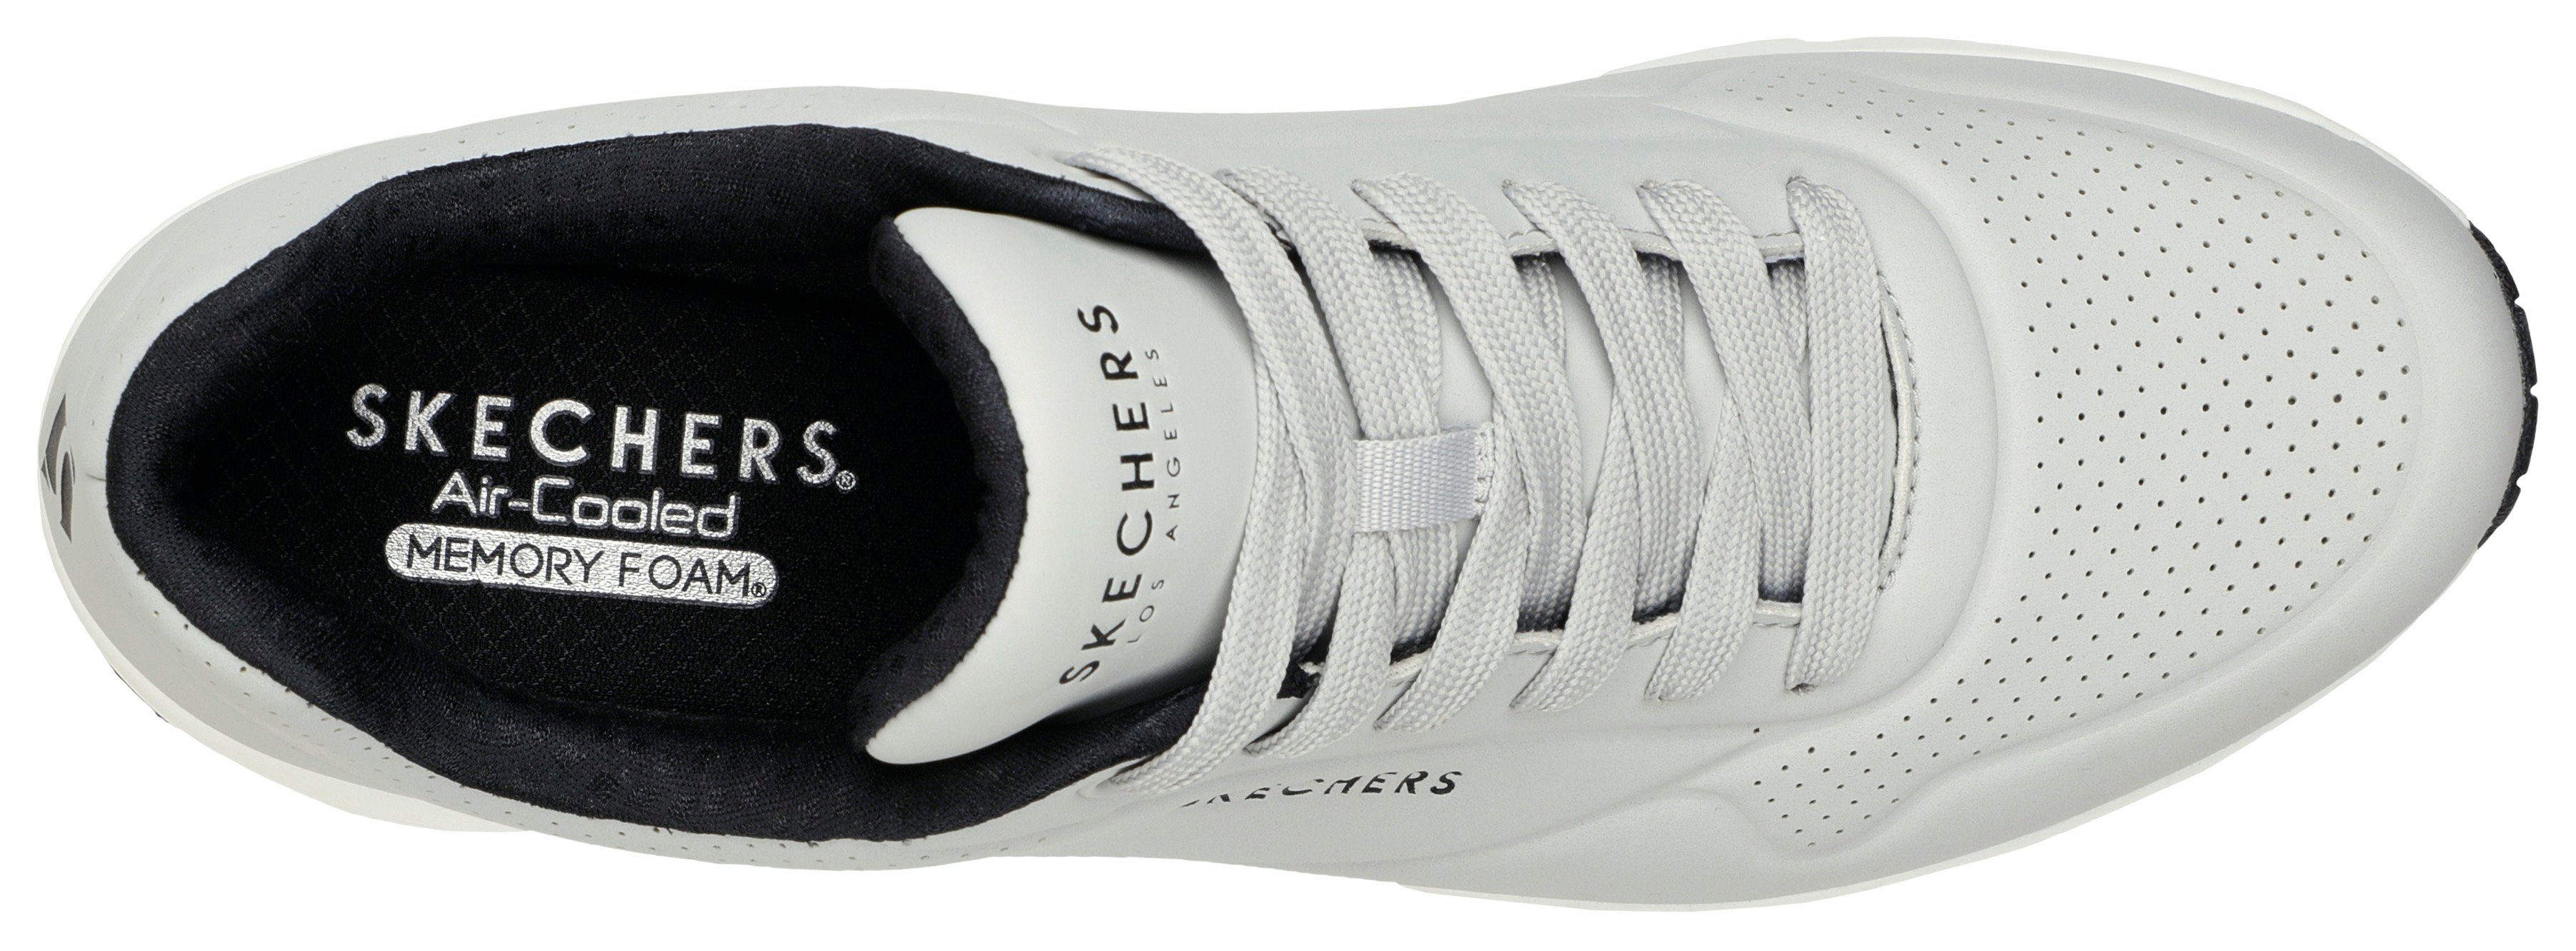 Skechers Uno Sneaker mit Foam Memory Air-Cooled hellgrau-schwarz